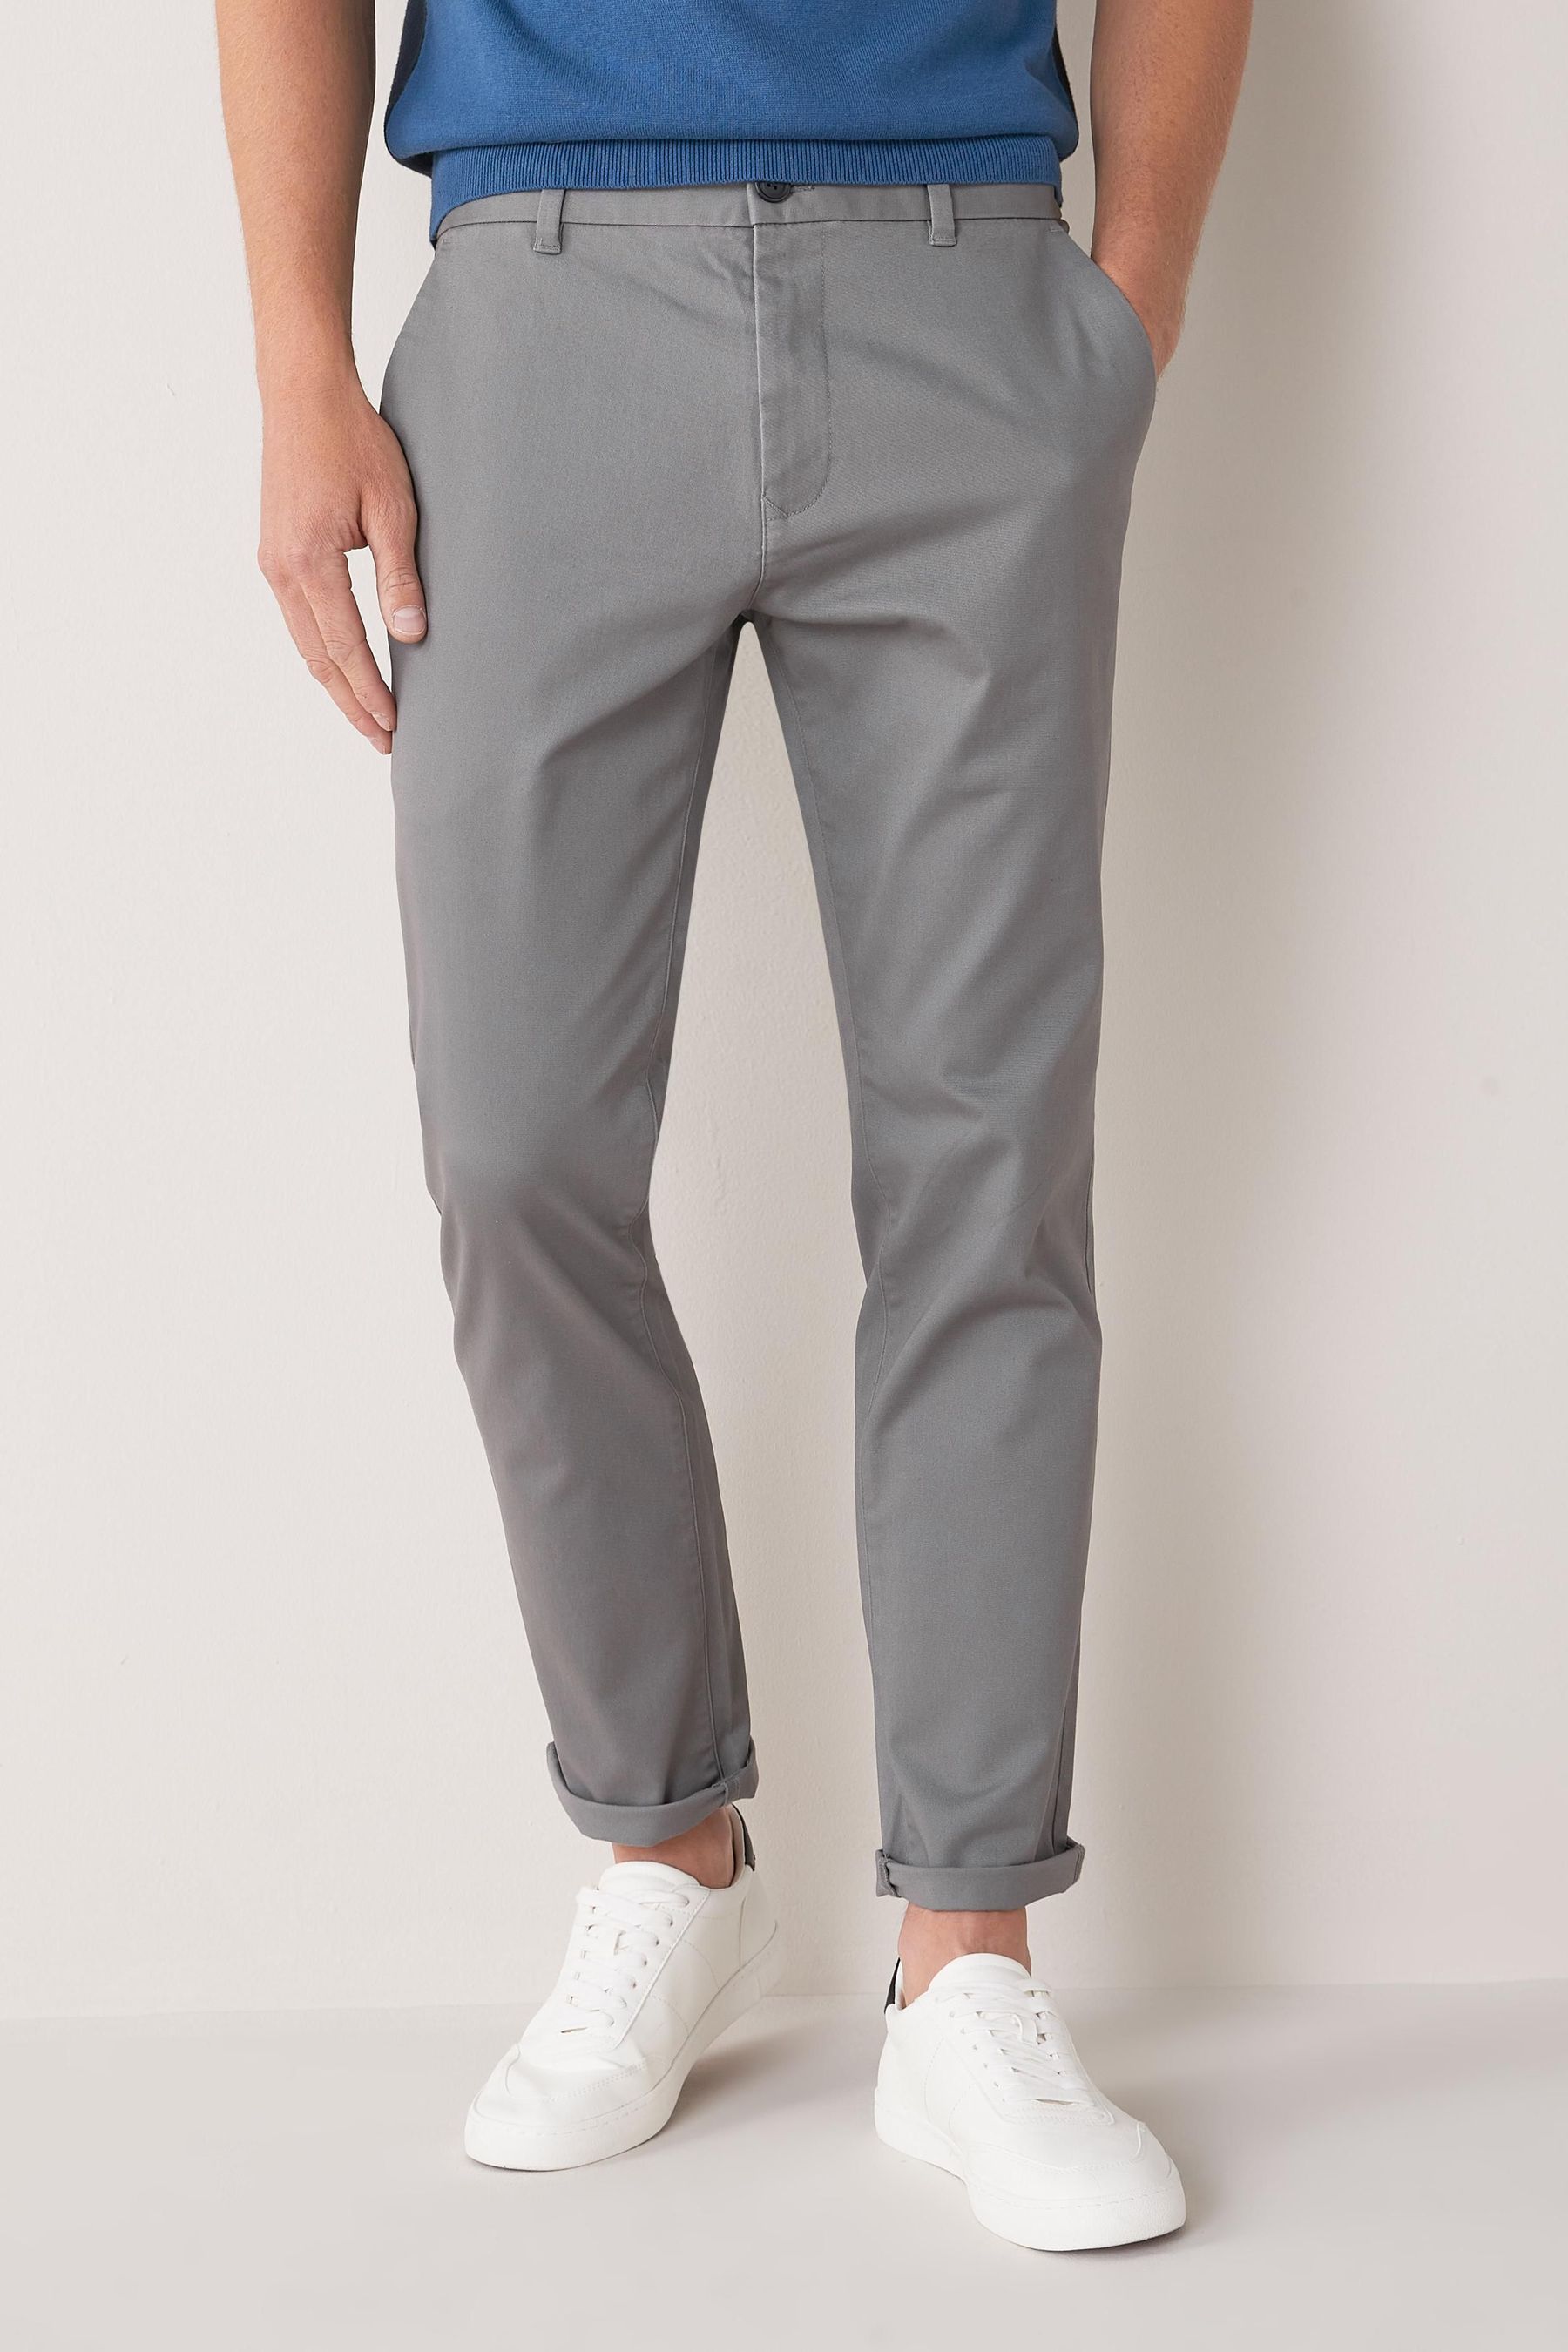 цена Узкие эластичные брюки-чиносы Next, серый